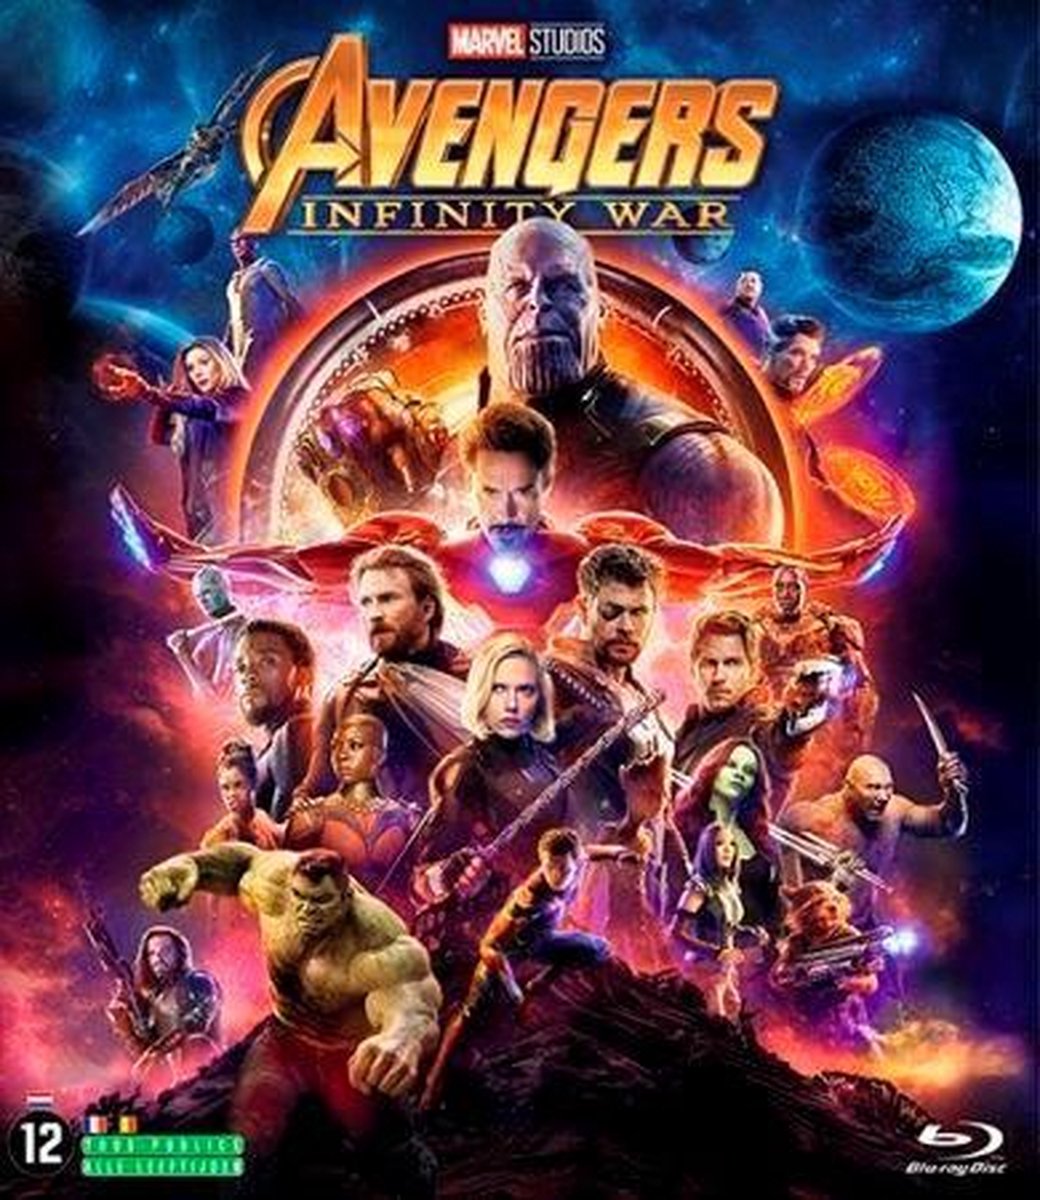 Avengers - Infinity War (Blu-ray) - Disney Movies